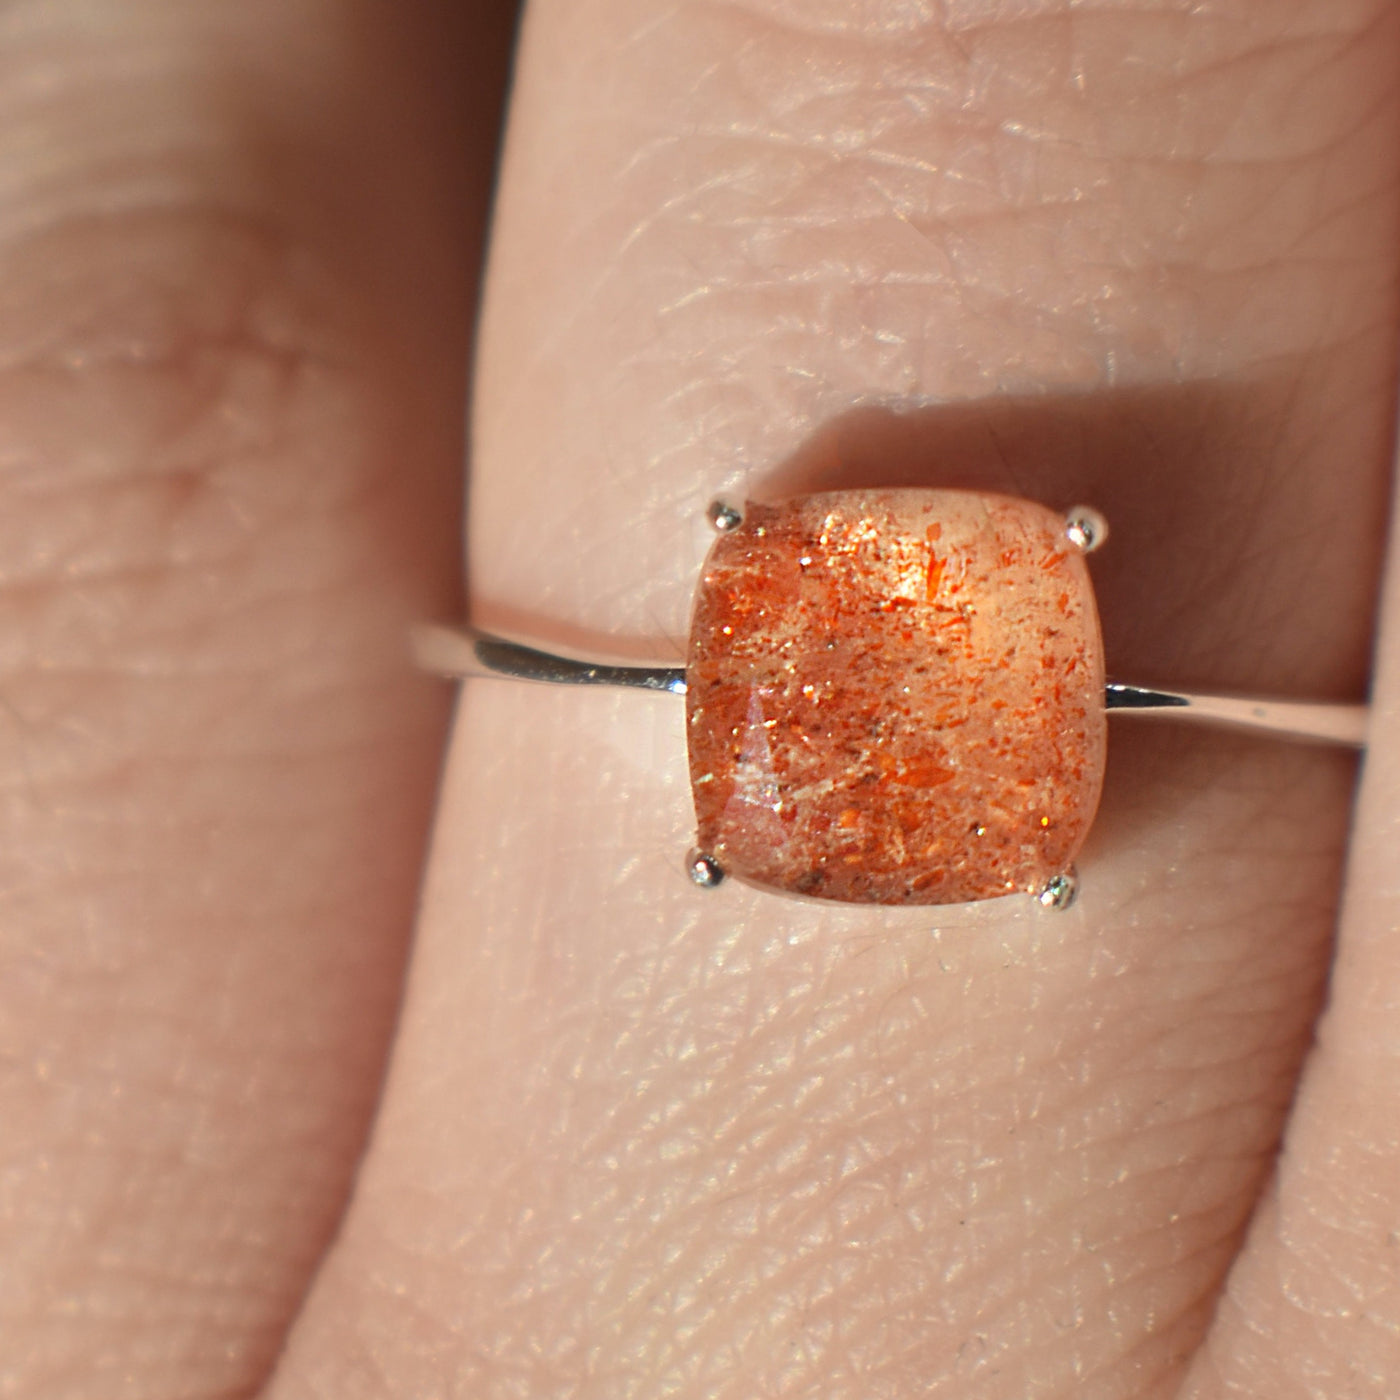 sunstone ring, Oregon sunstone ring, stonestone jewelry, natural sunstone, raw sunstone ring, sunstone jewelry